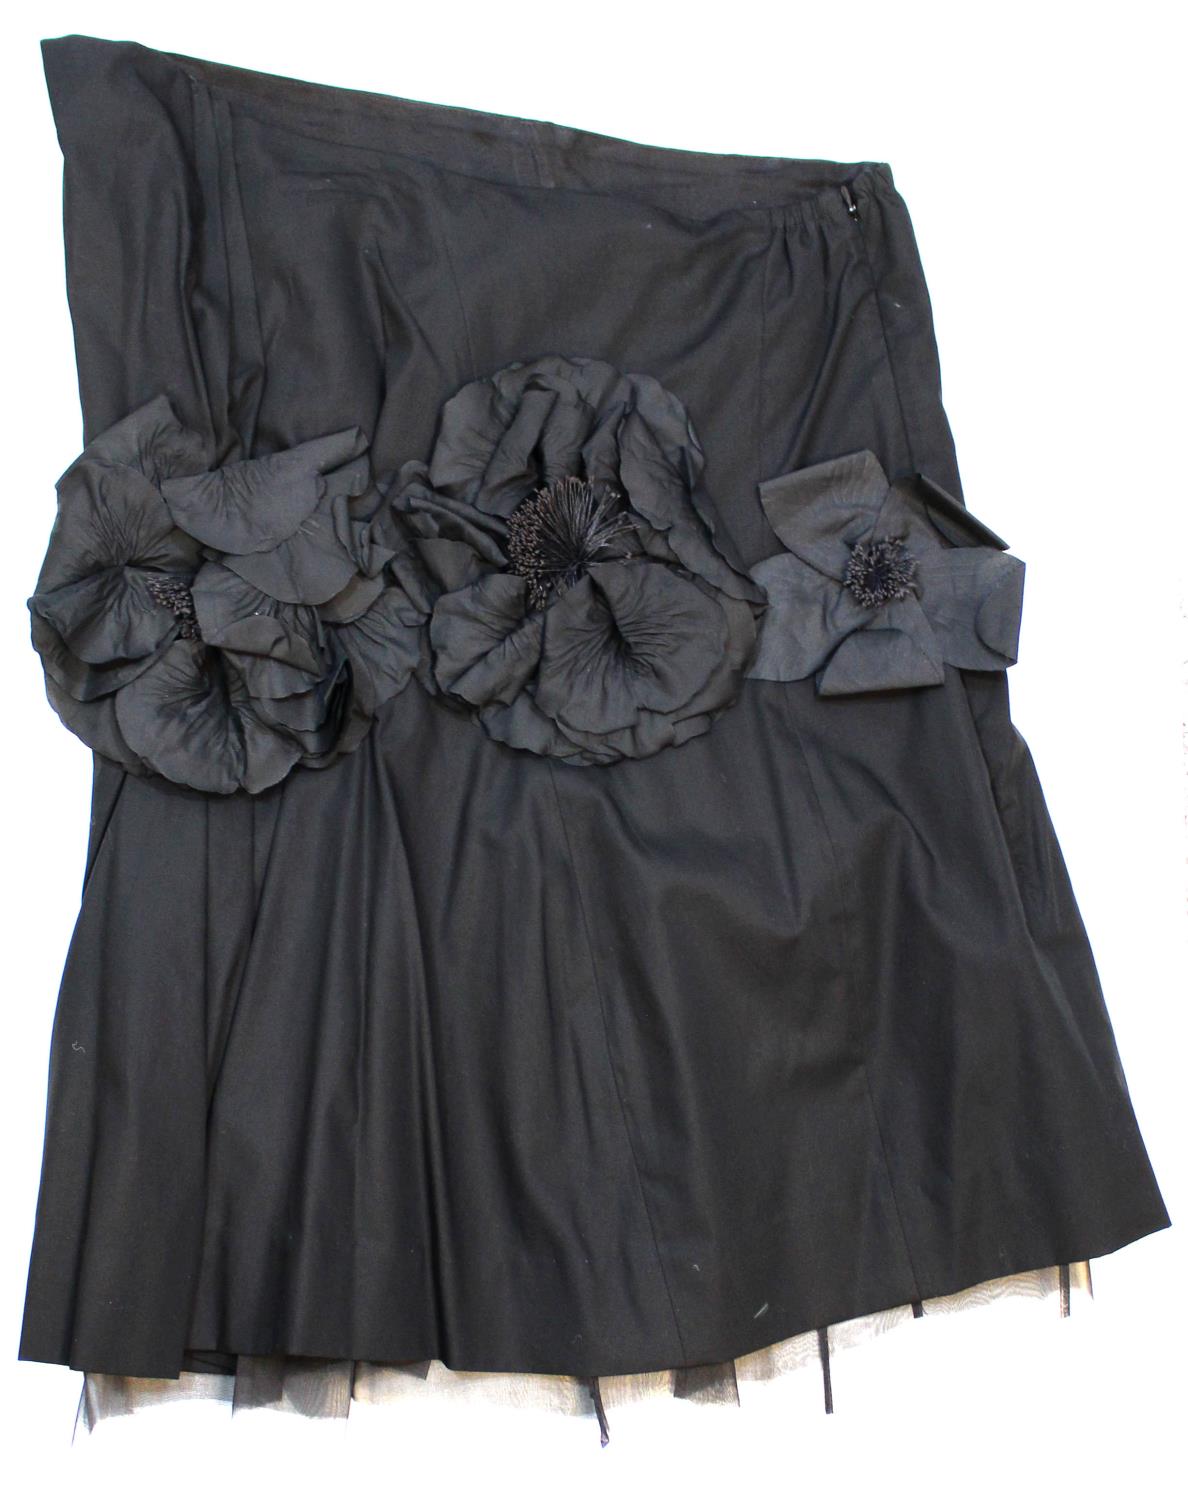 CHER MICHEL KLEIN, BLACK COTTON SKIRT With net underlayer, large black fabric flowers and hidden